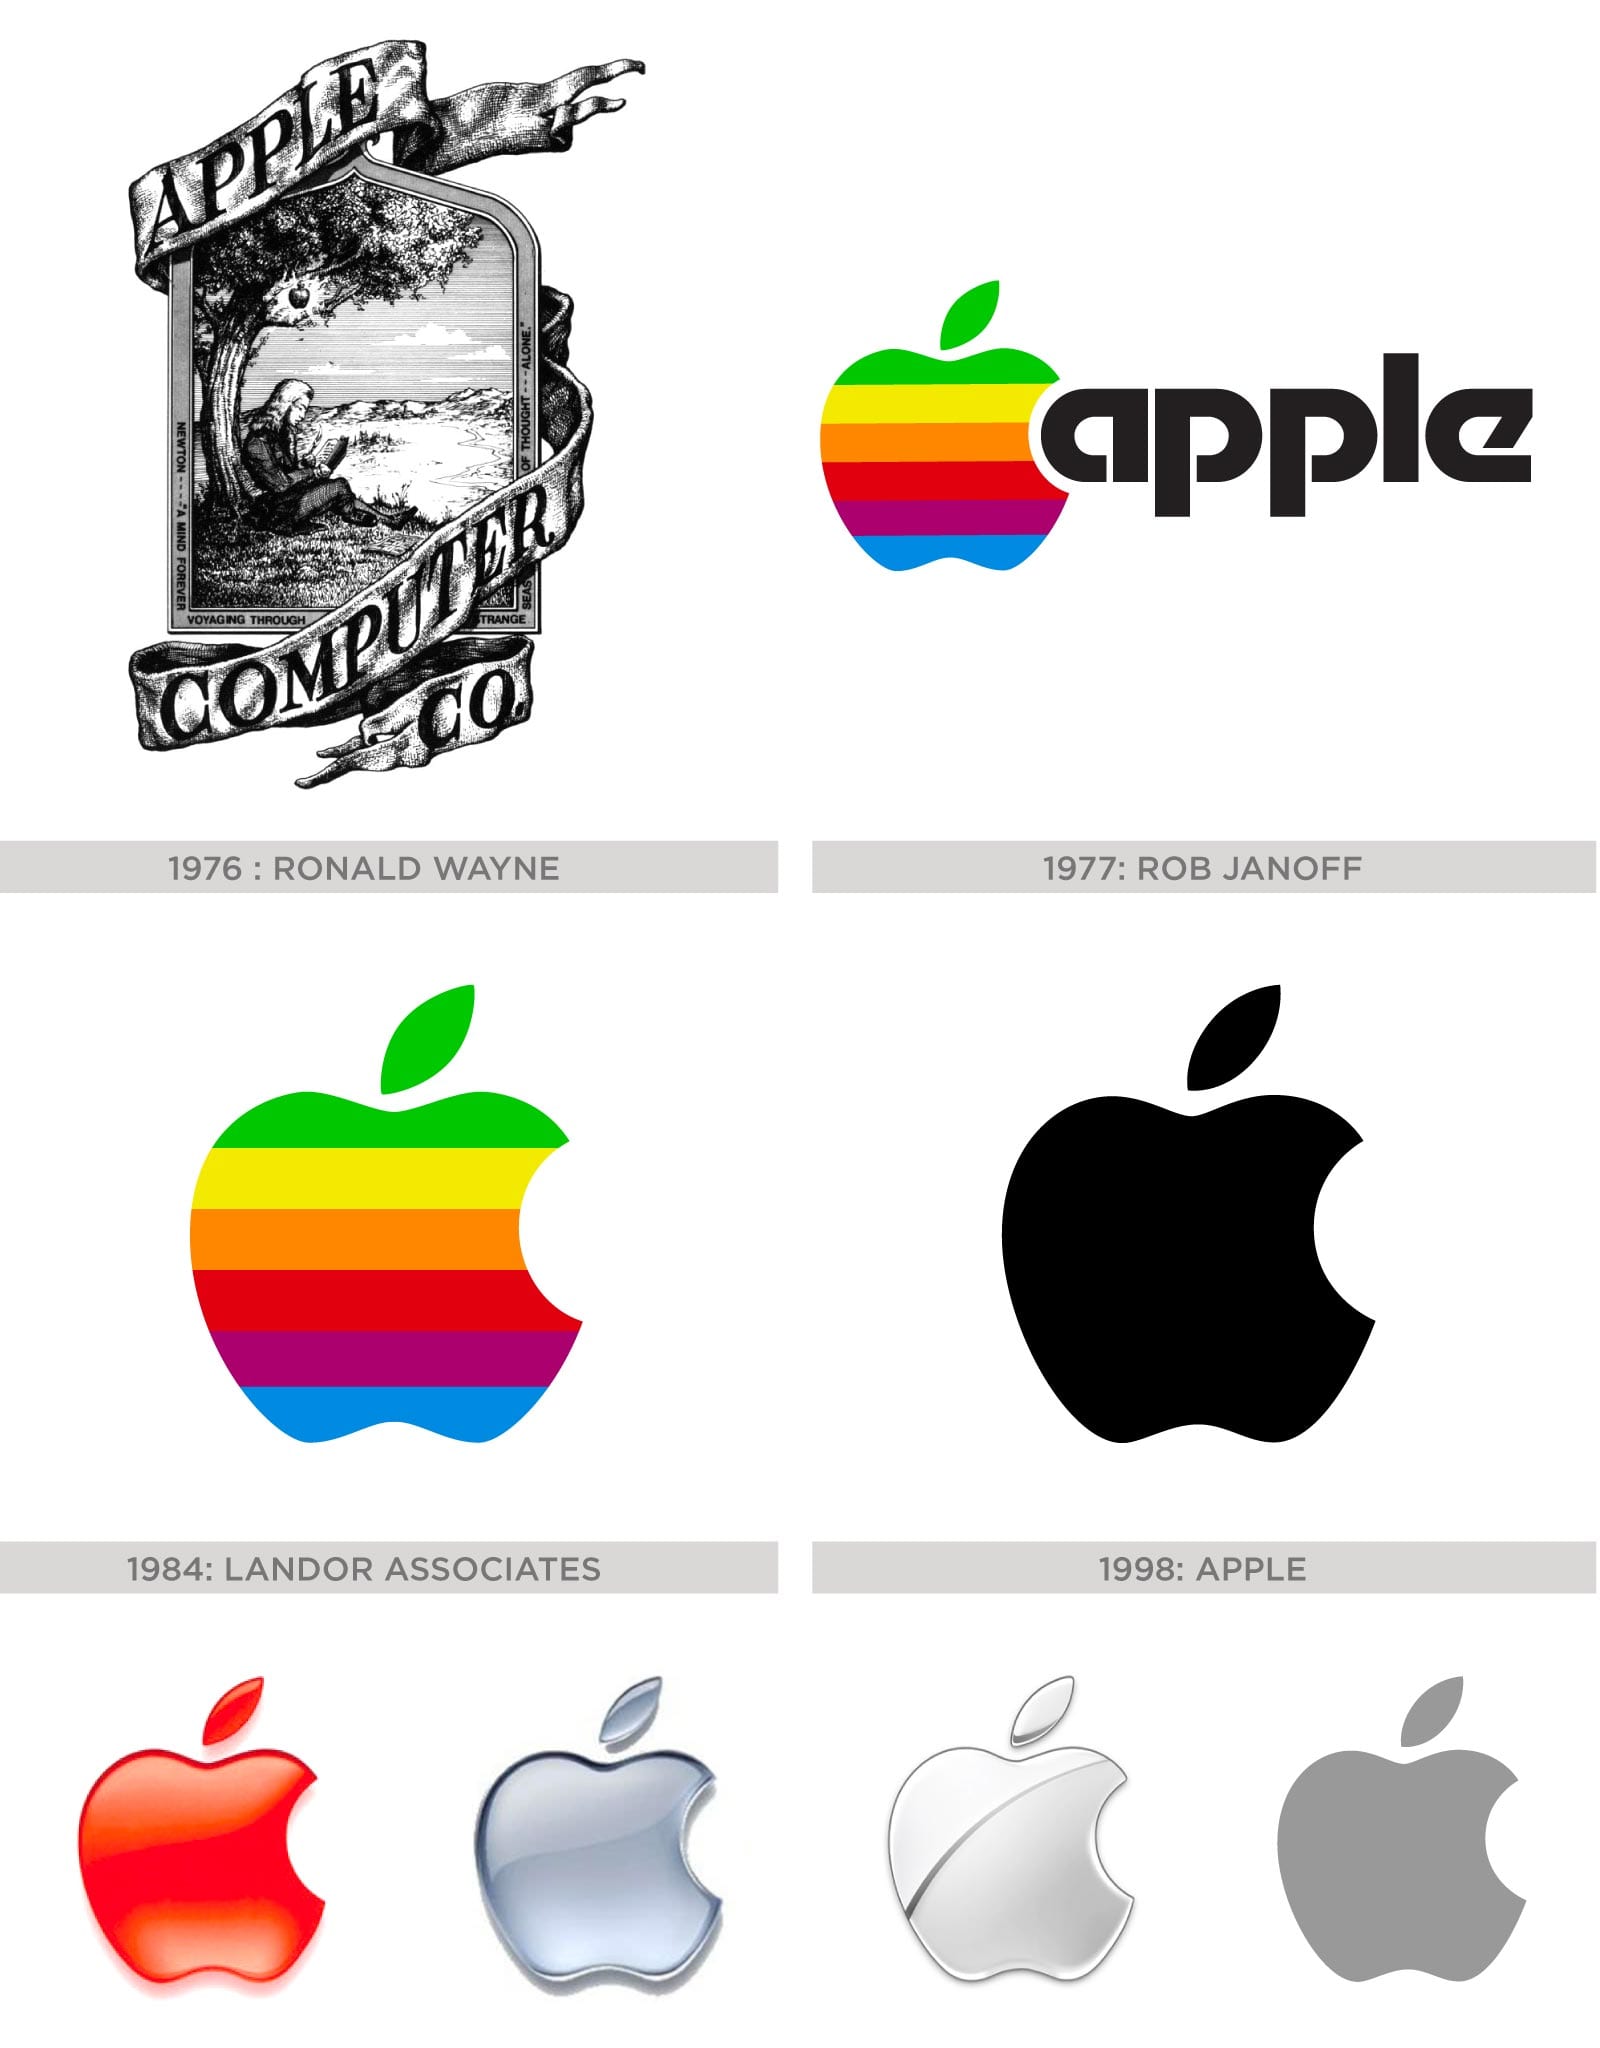 who designed the apple logo